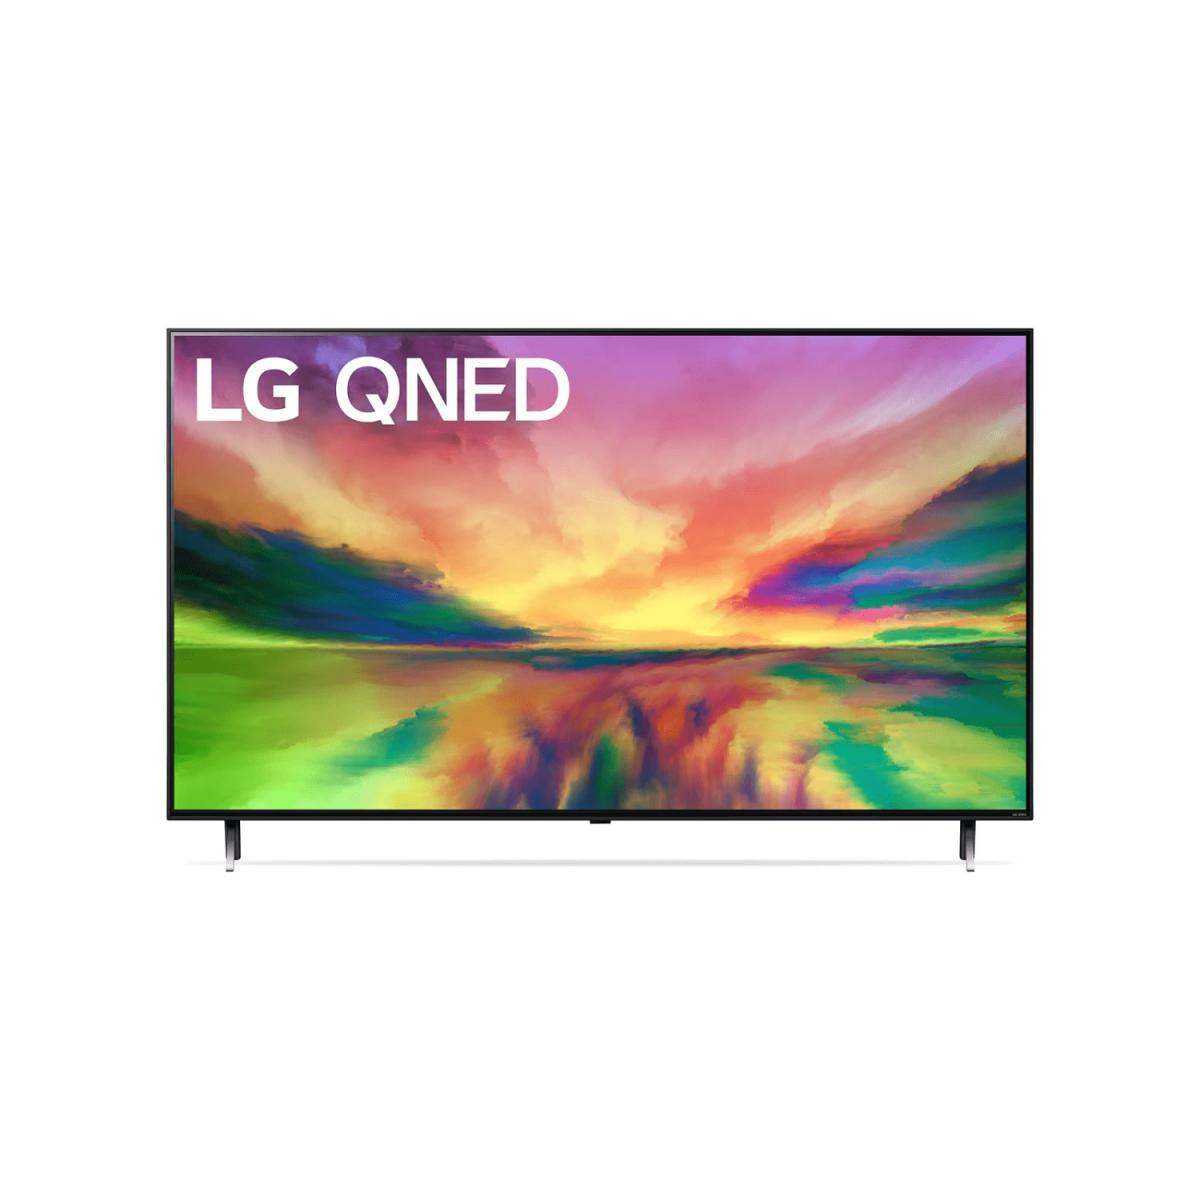 TV LG QNED 55" SMART AI THINQ 4K